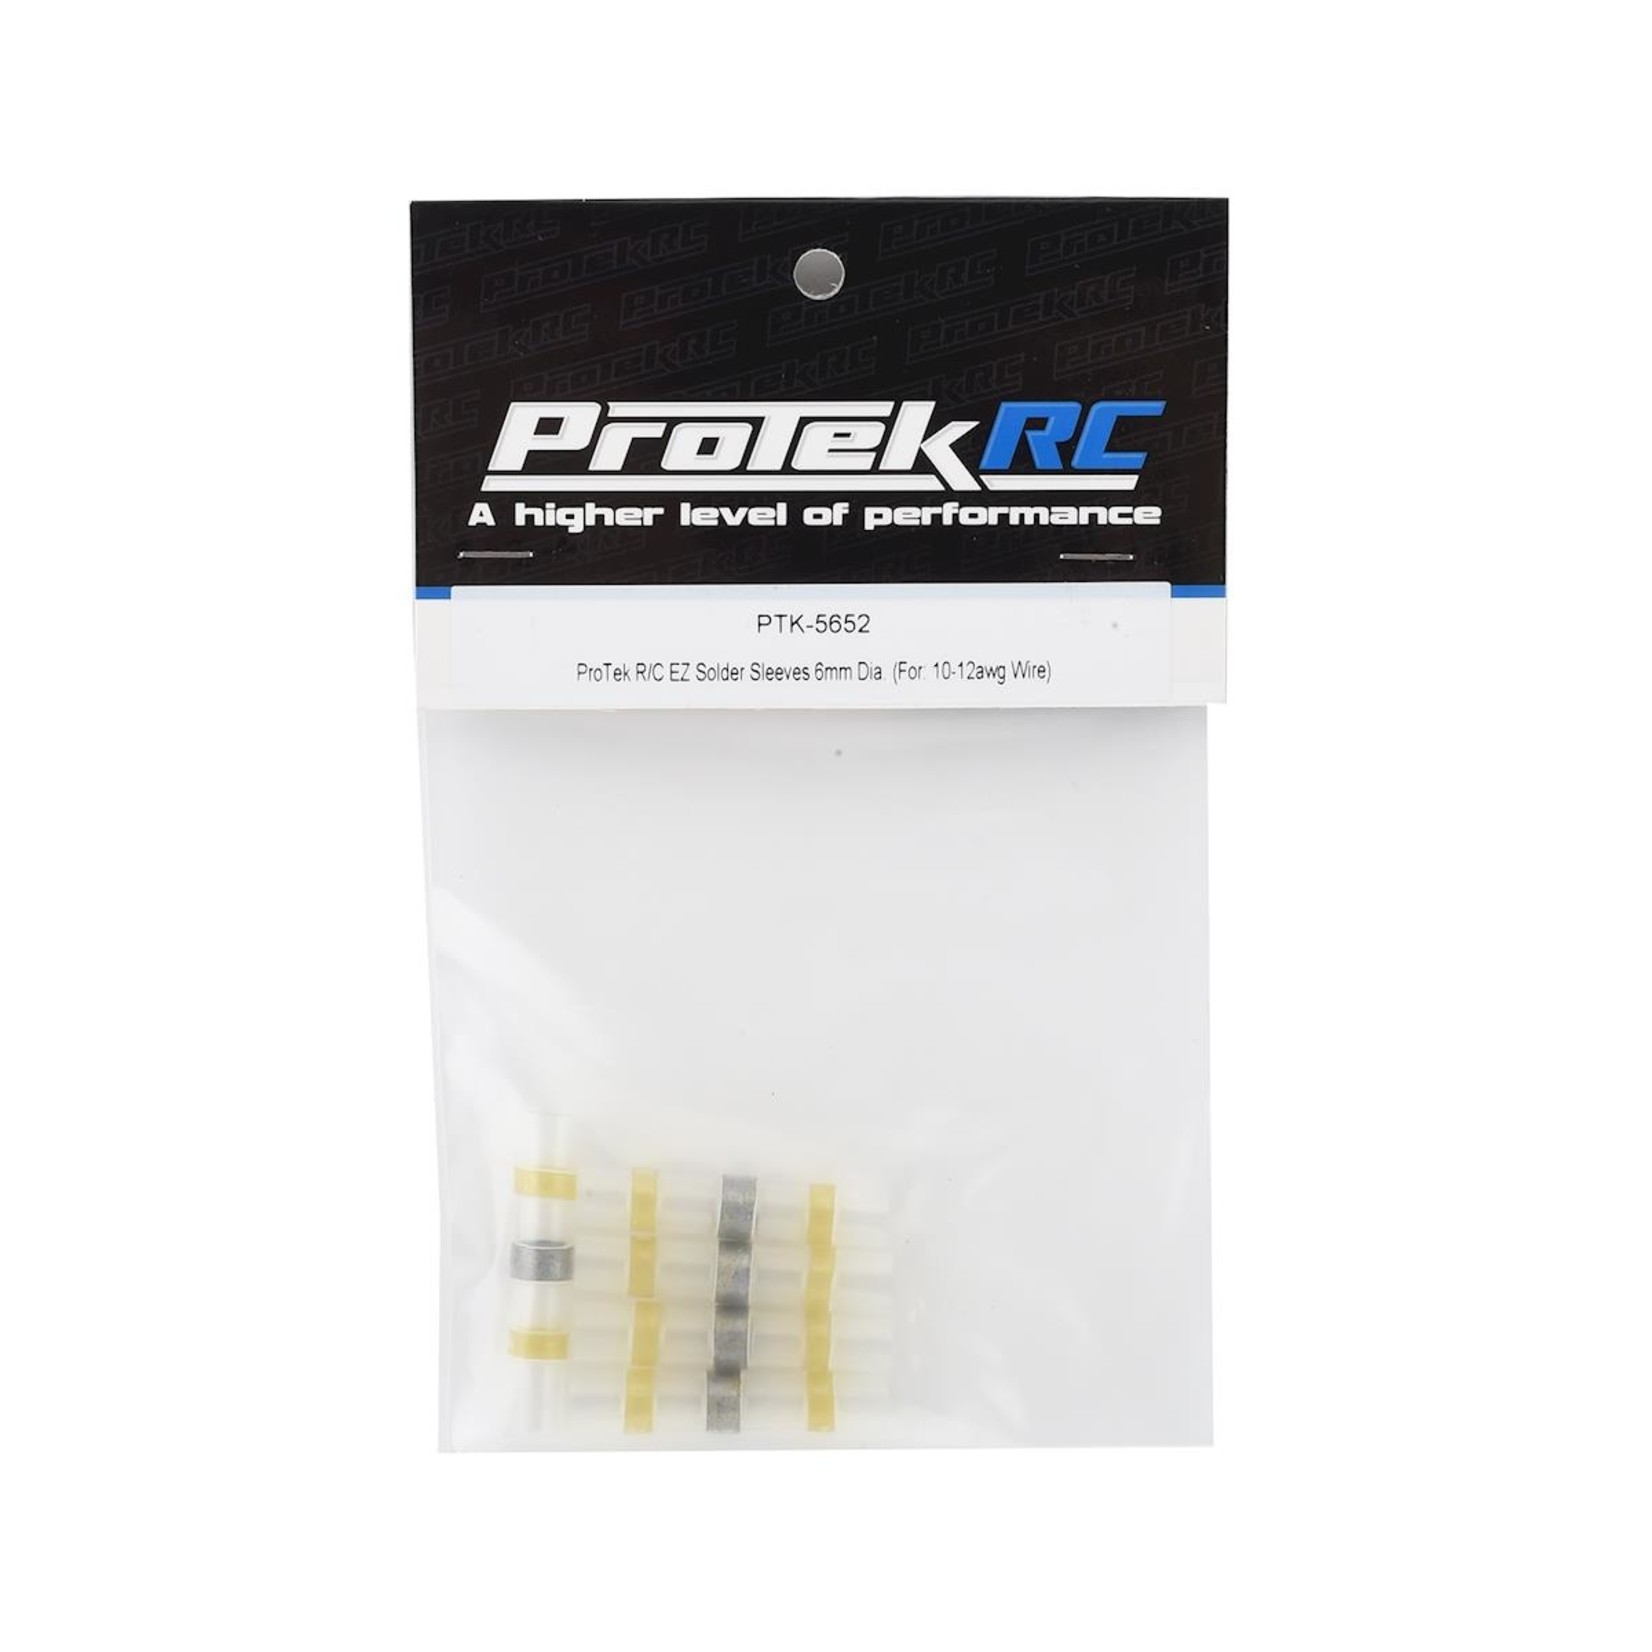 Protek R/C PTK-5652  ProTek RC 6mm EZ Solder Splice Tube Sleeves (5) (12-10awg Wire)